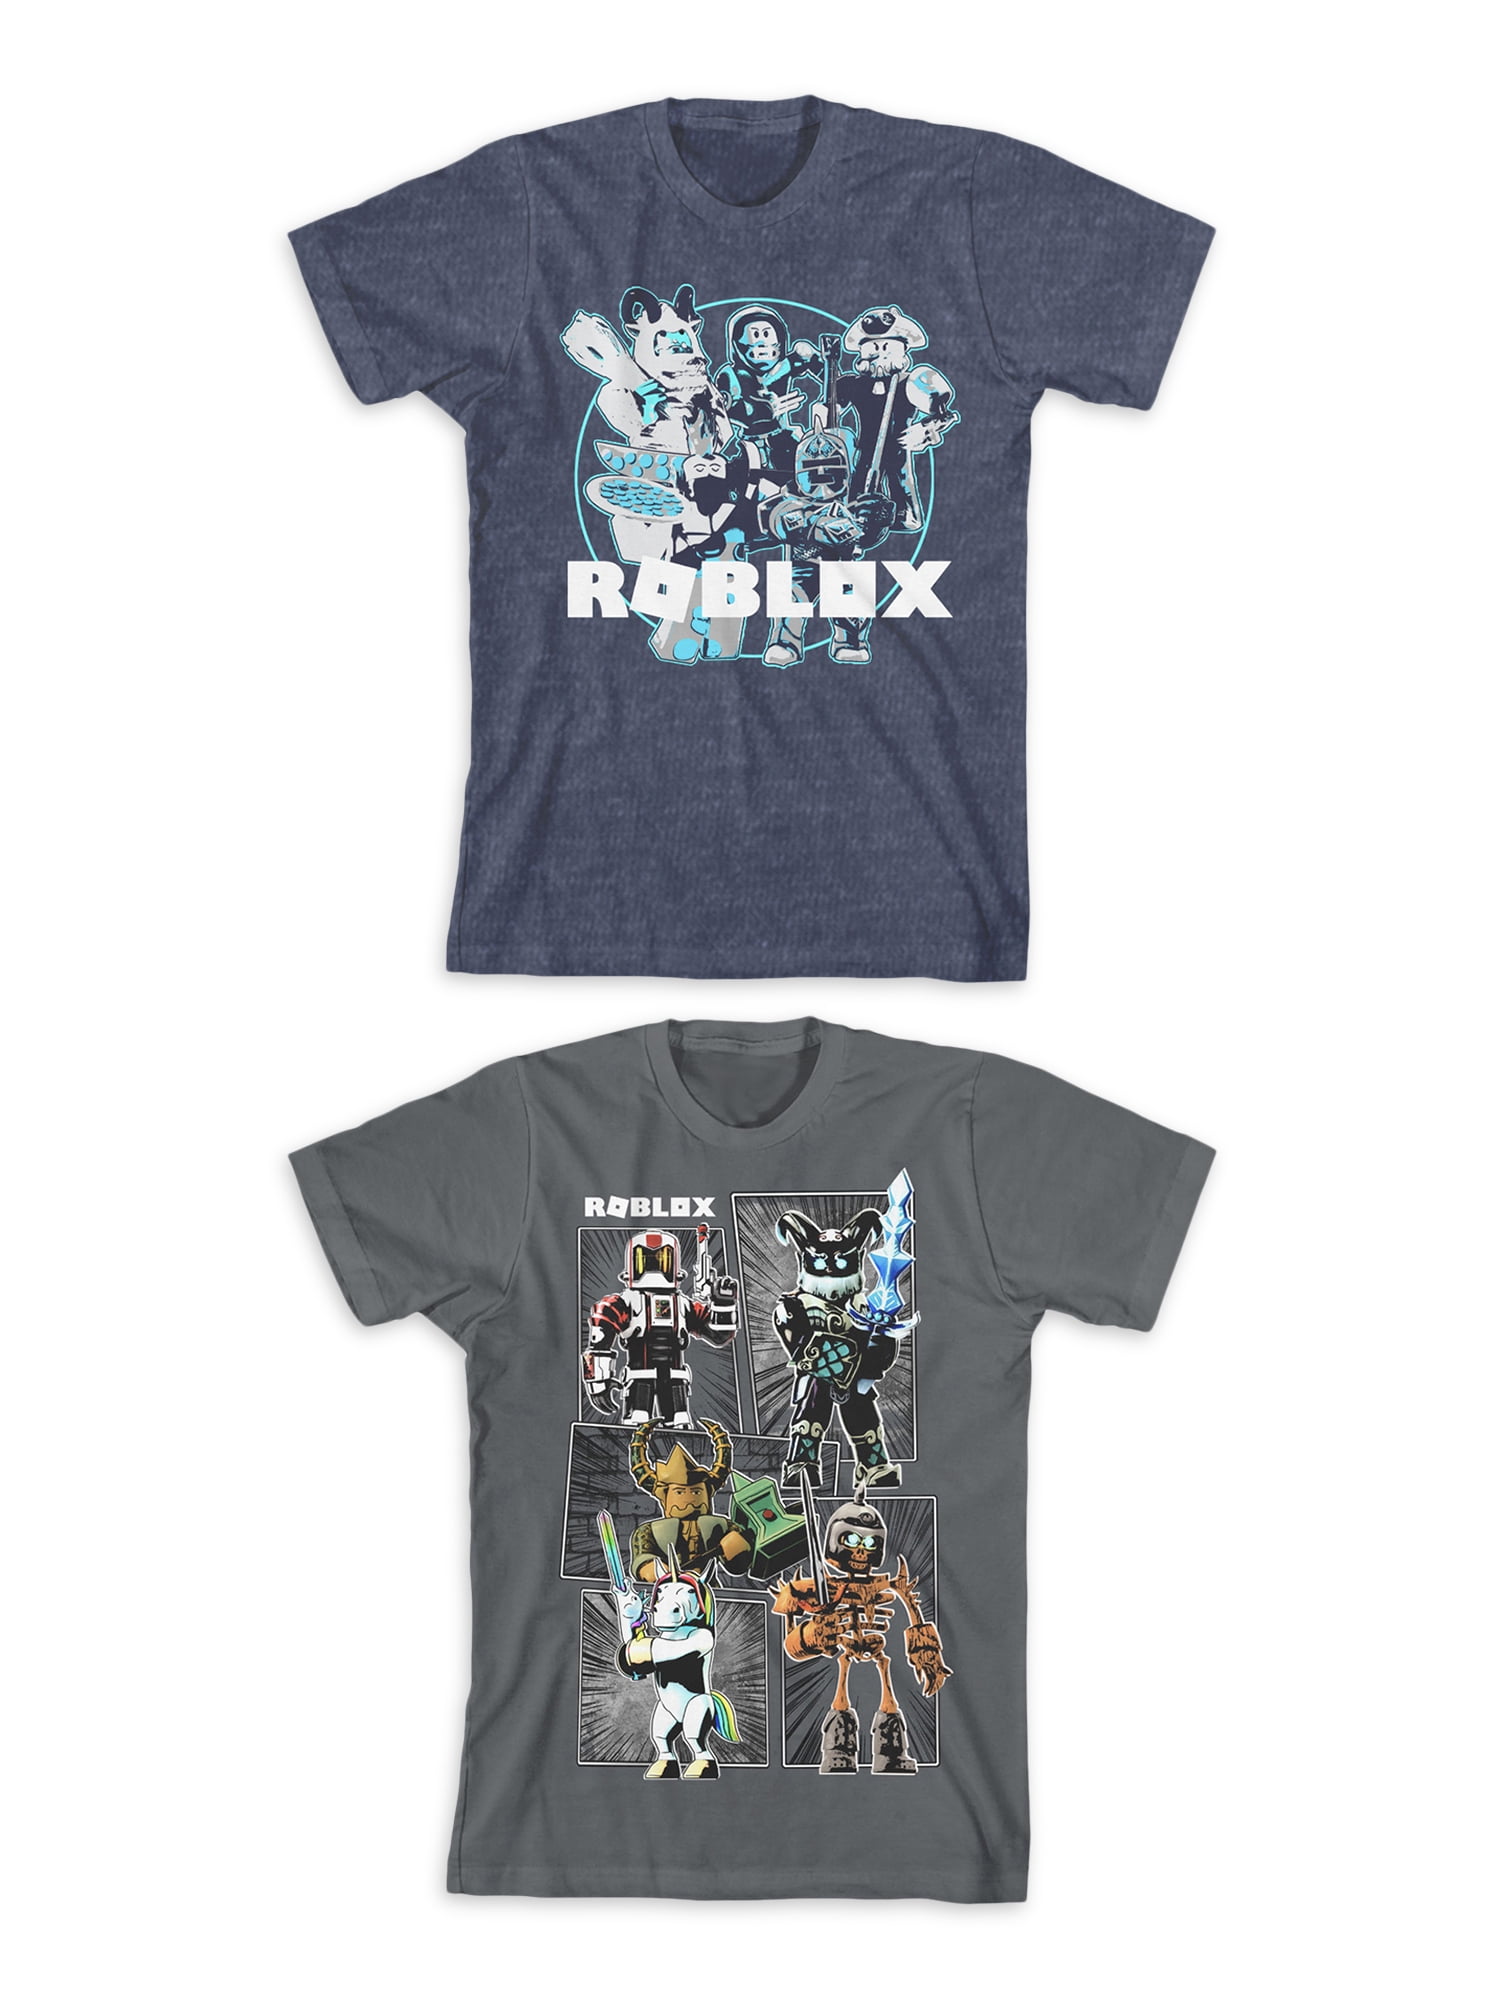 Roblox Roblox Boys Warriors Graphic T Shirts 2 Pack Sizes 4 18 Walmart Com Walmart Com - trendsetter hair in black roblox